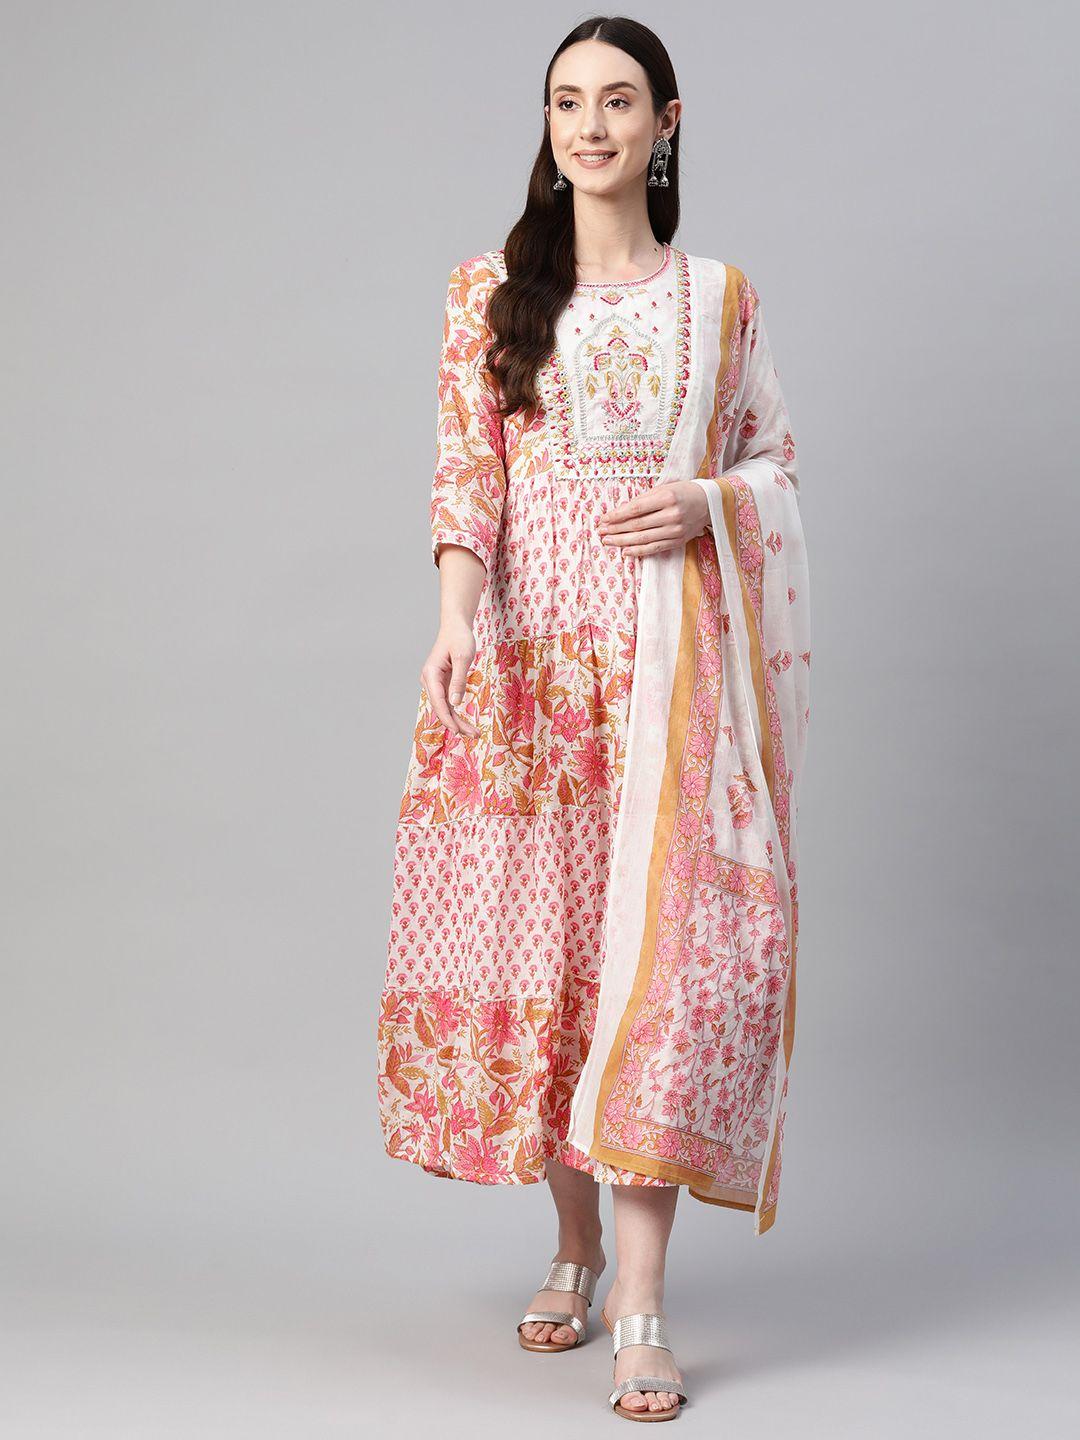 readiprint fashions floral cotton ethnic maxi ethnic dress